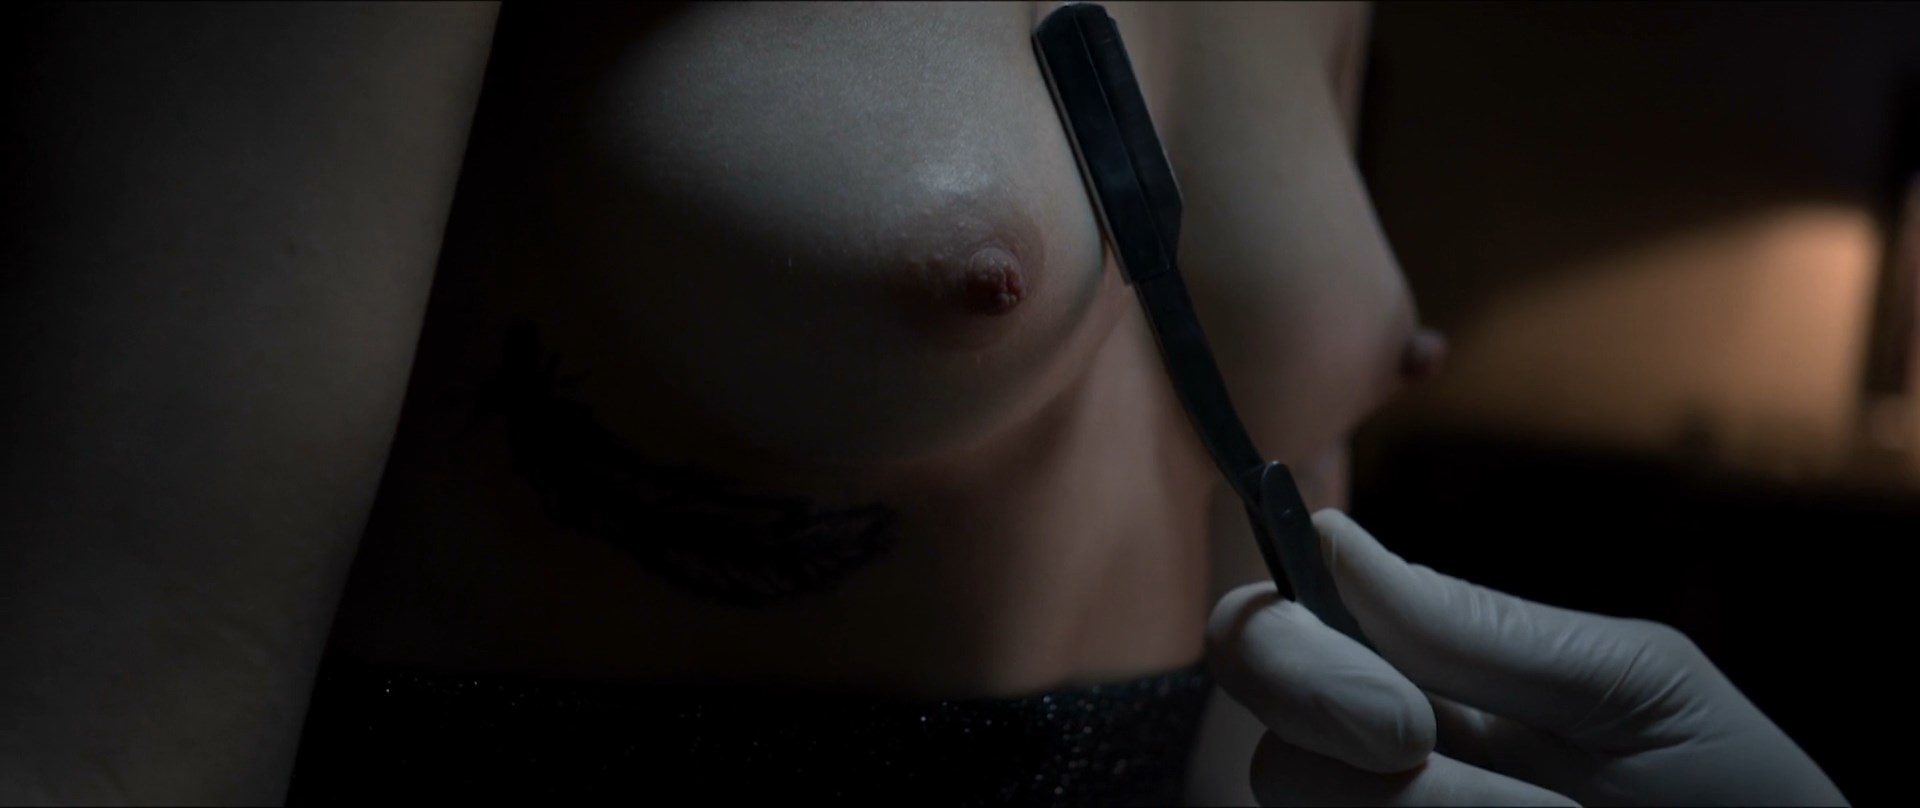 Nude Video Celebs Kirsty Averton Nude The Holly Kane